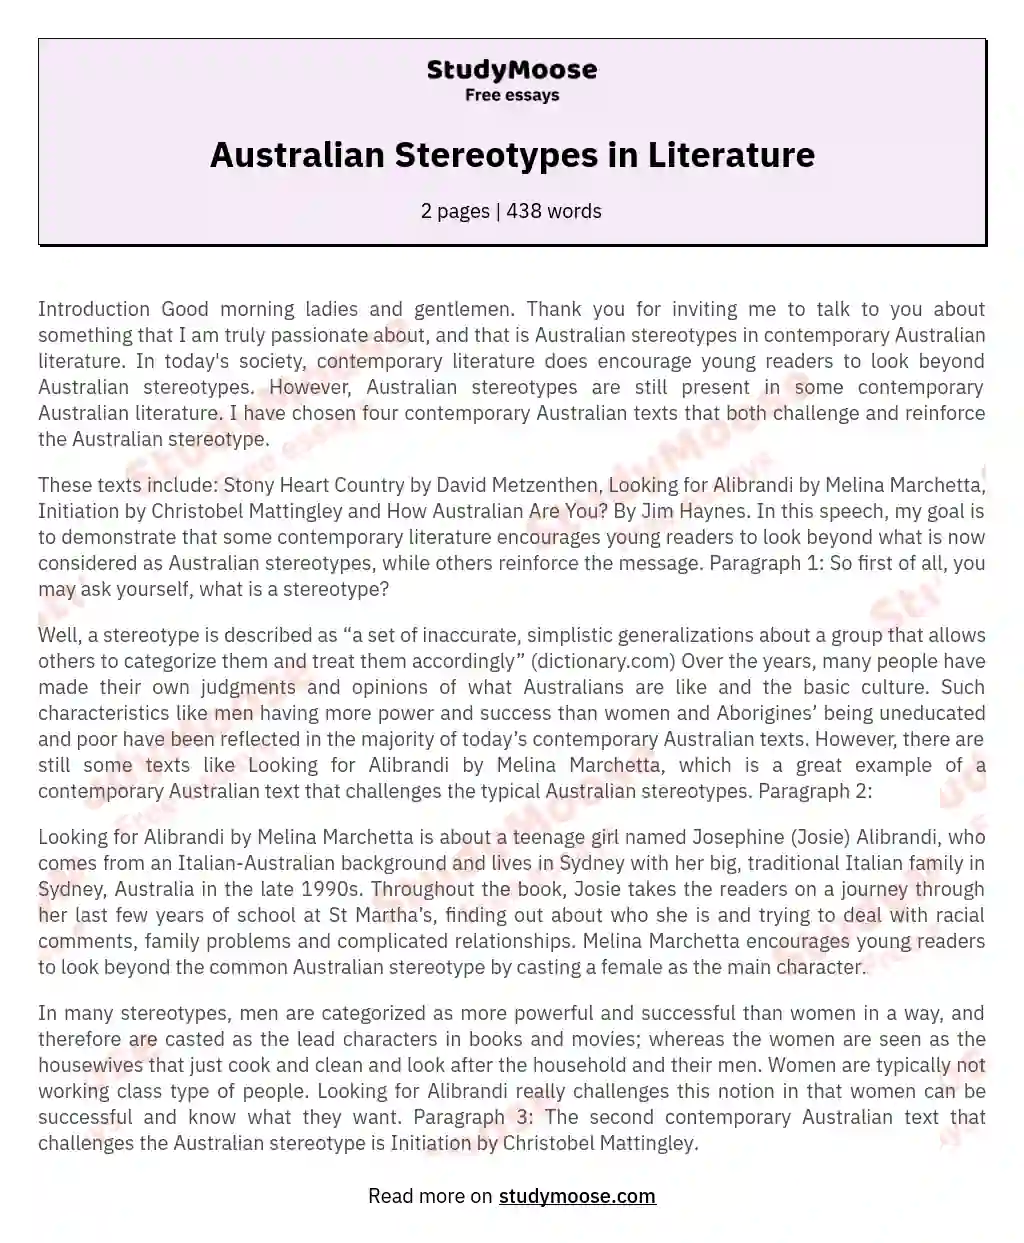 Australian Stereotypes in Literature essay